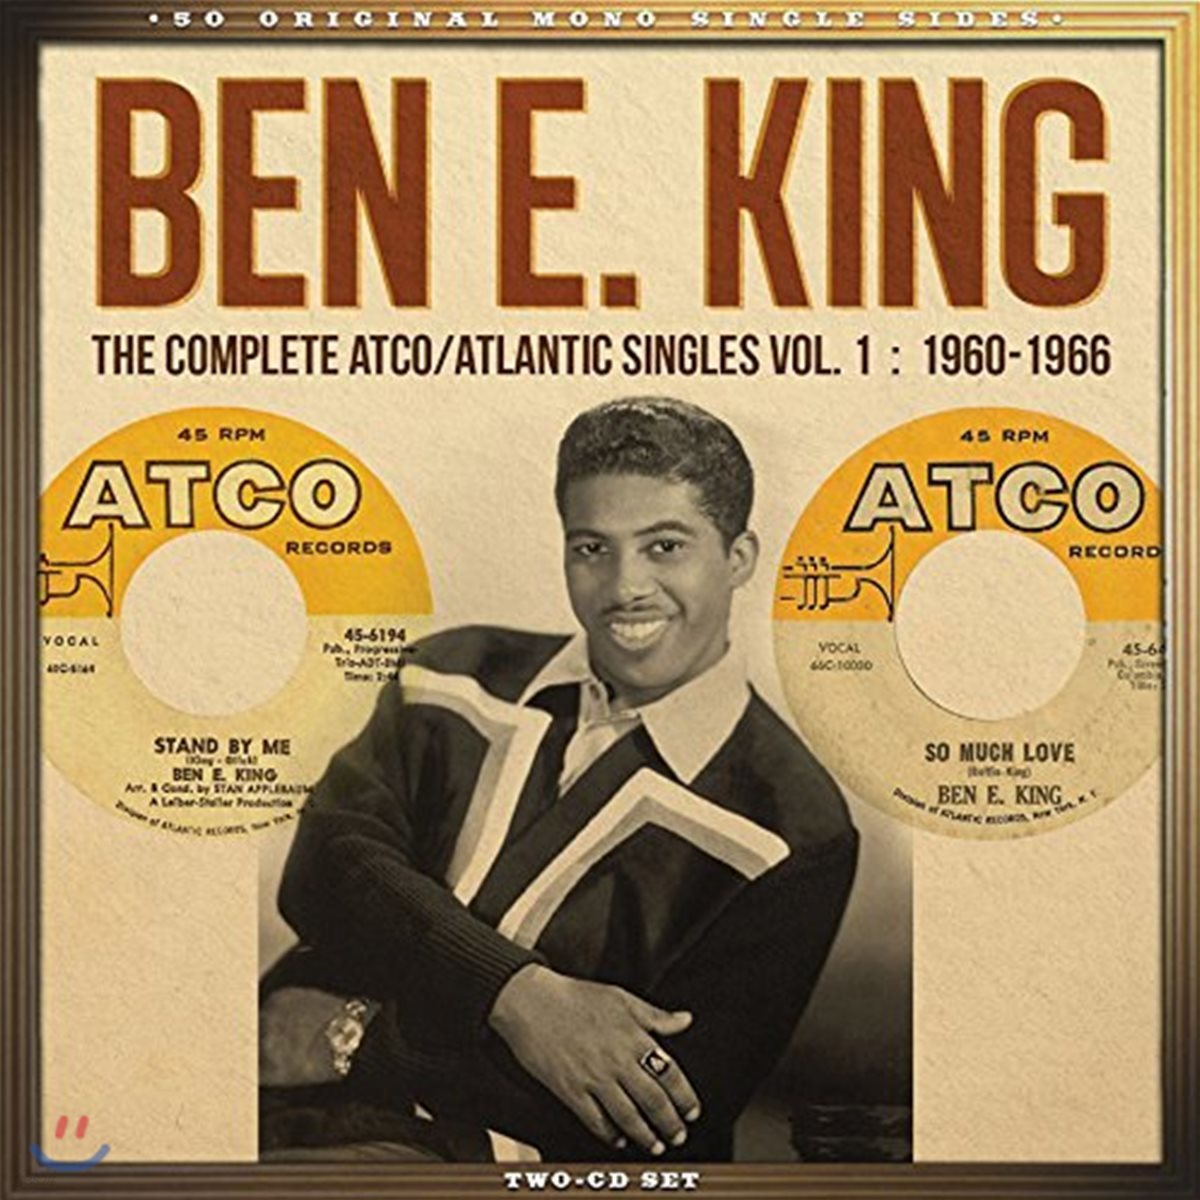 Ben E. King (벤 E. 킹) - The Complete Atco/Atlantic Singles Vol.1: 1960-1966